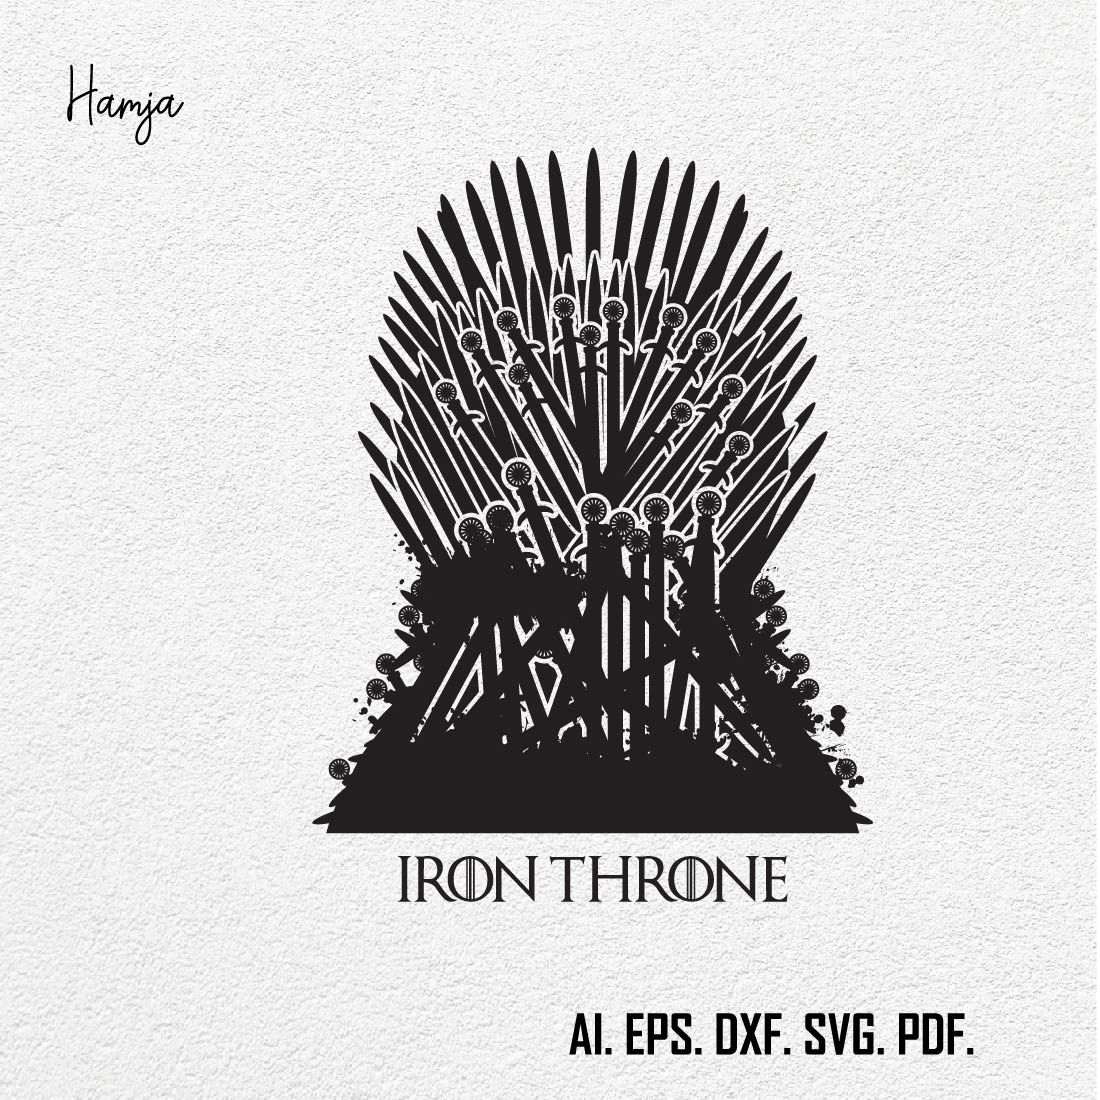 Iron Throne Vector design cover image.